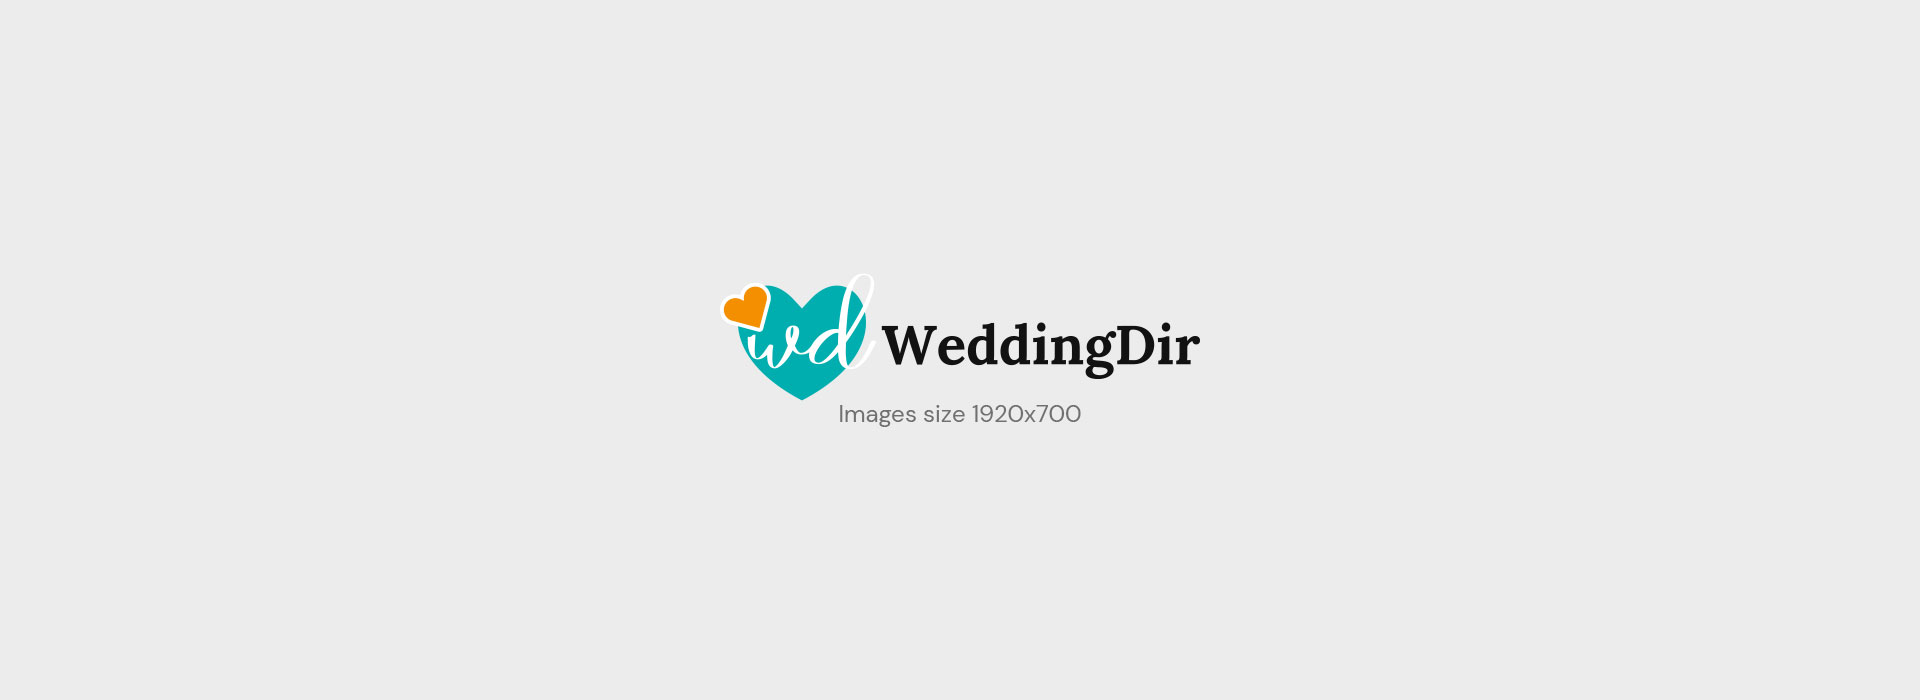 Music Category Vendor Gallery 13 Wedding Music weddingdir slider 4